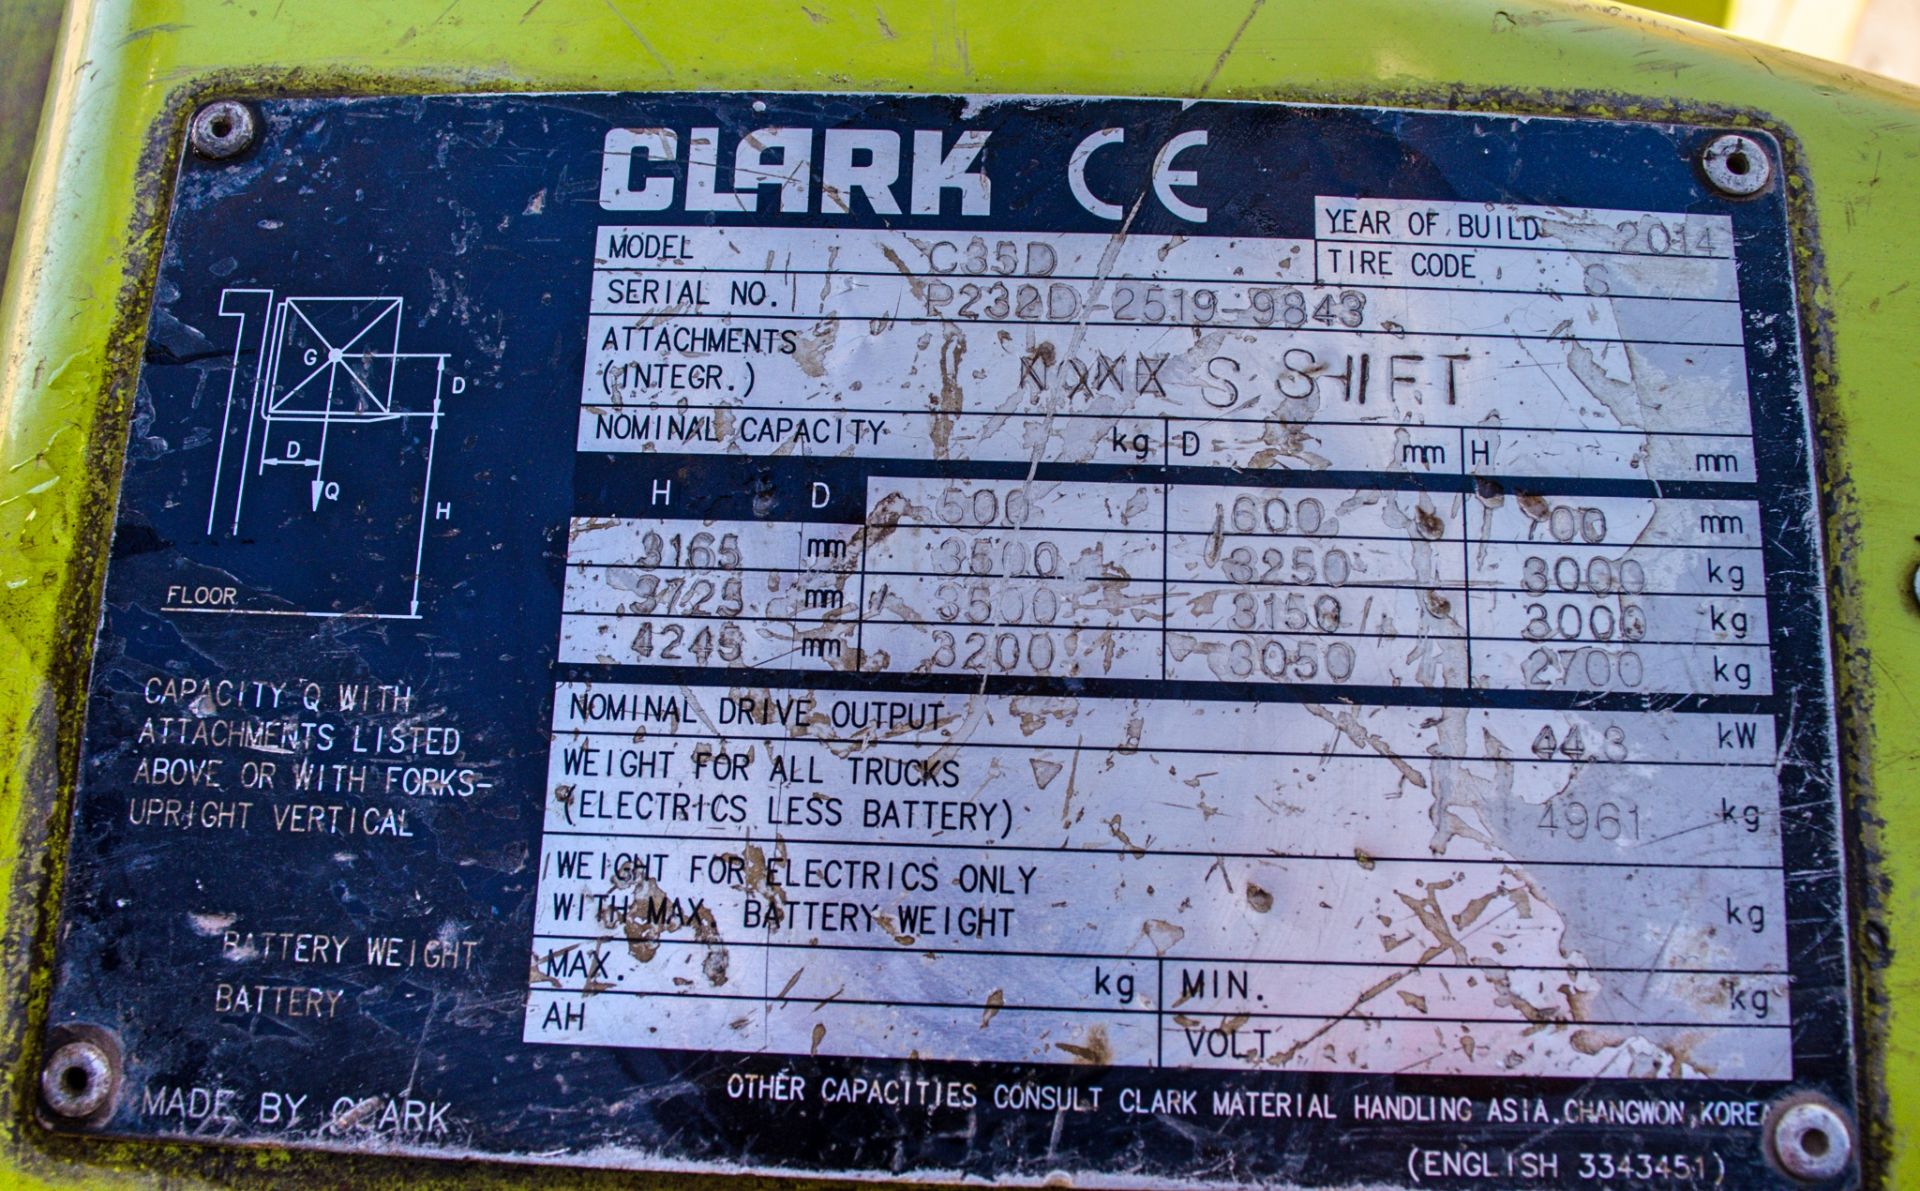 Clark C35D 3.5 tonne diesel fork lift truck Year; 2014 S/N: 2519-9843 Recorded Hours: 3538 N401624 - Image 19 of 20